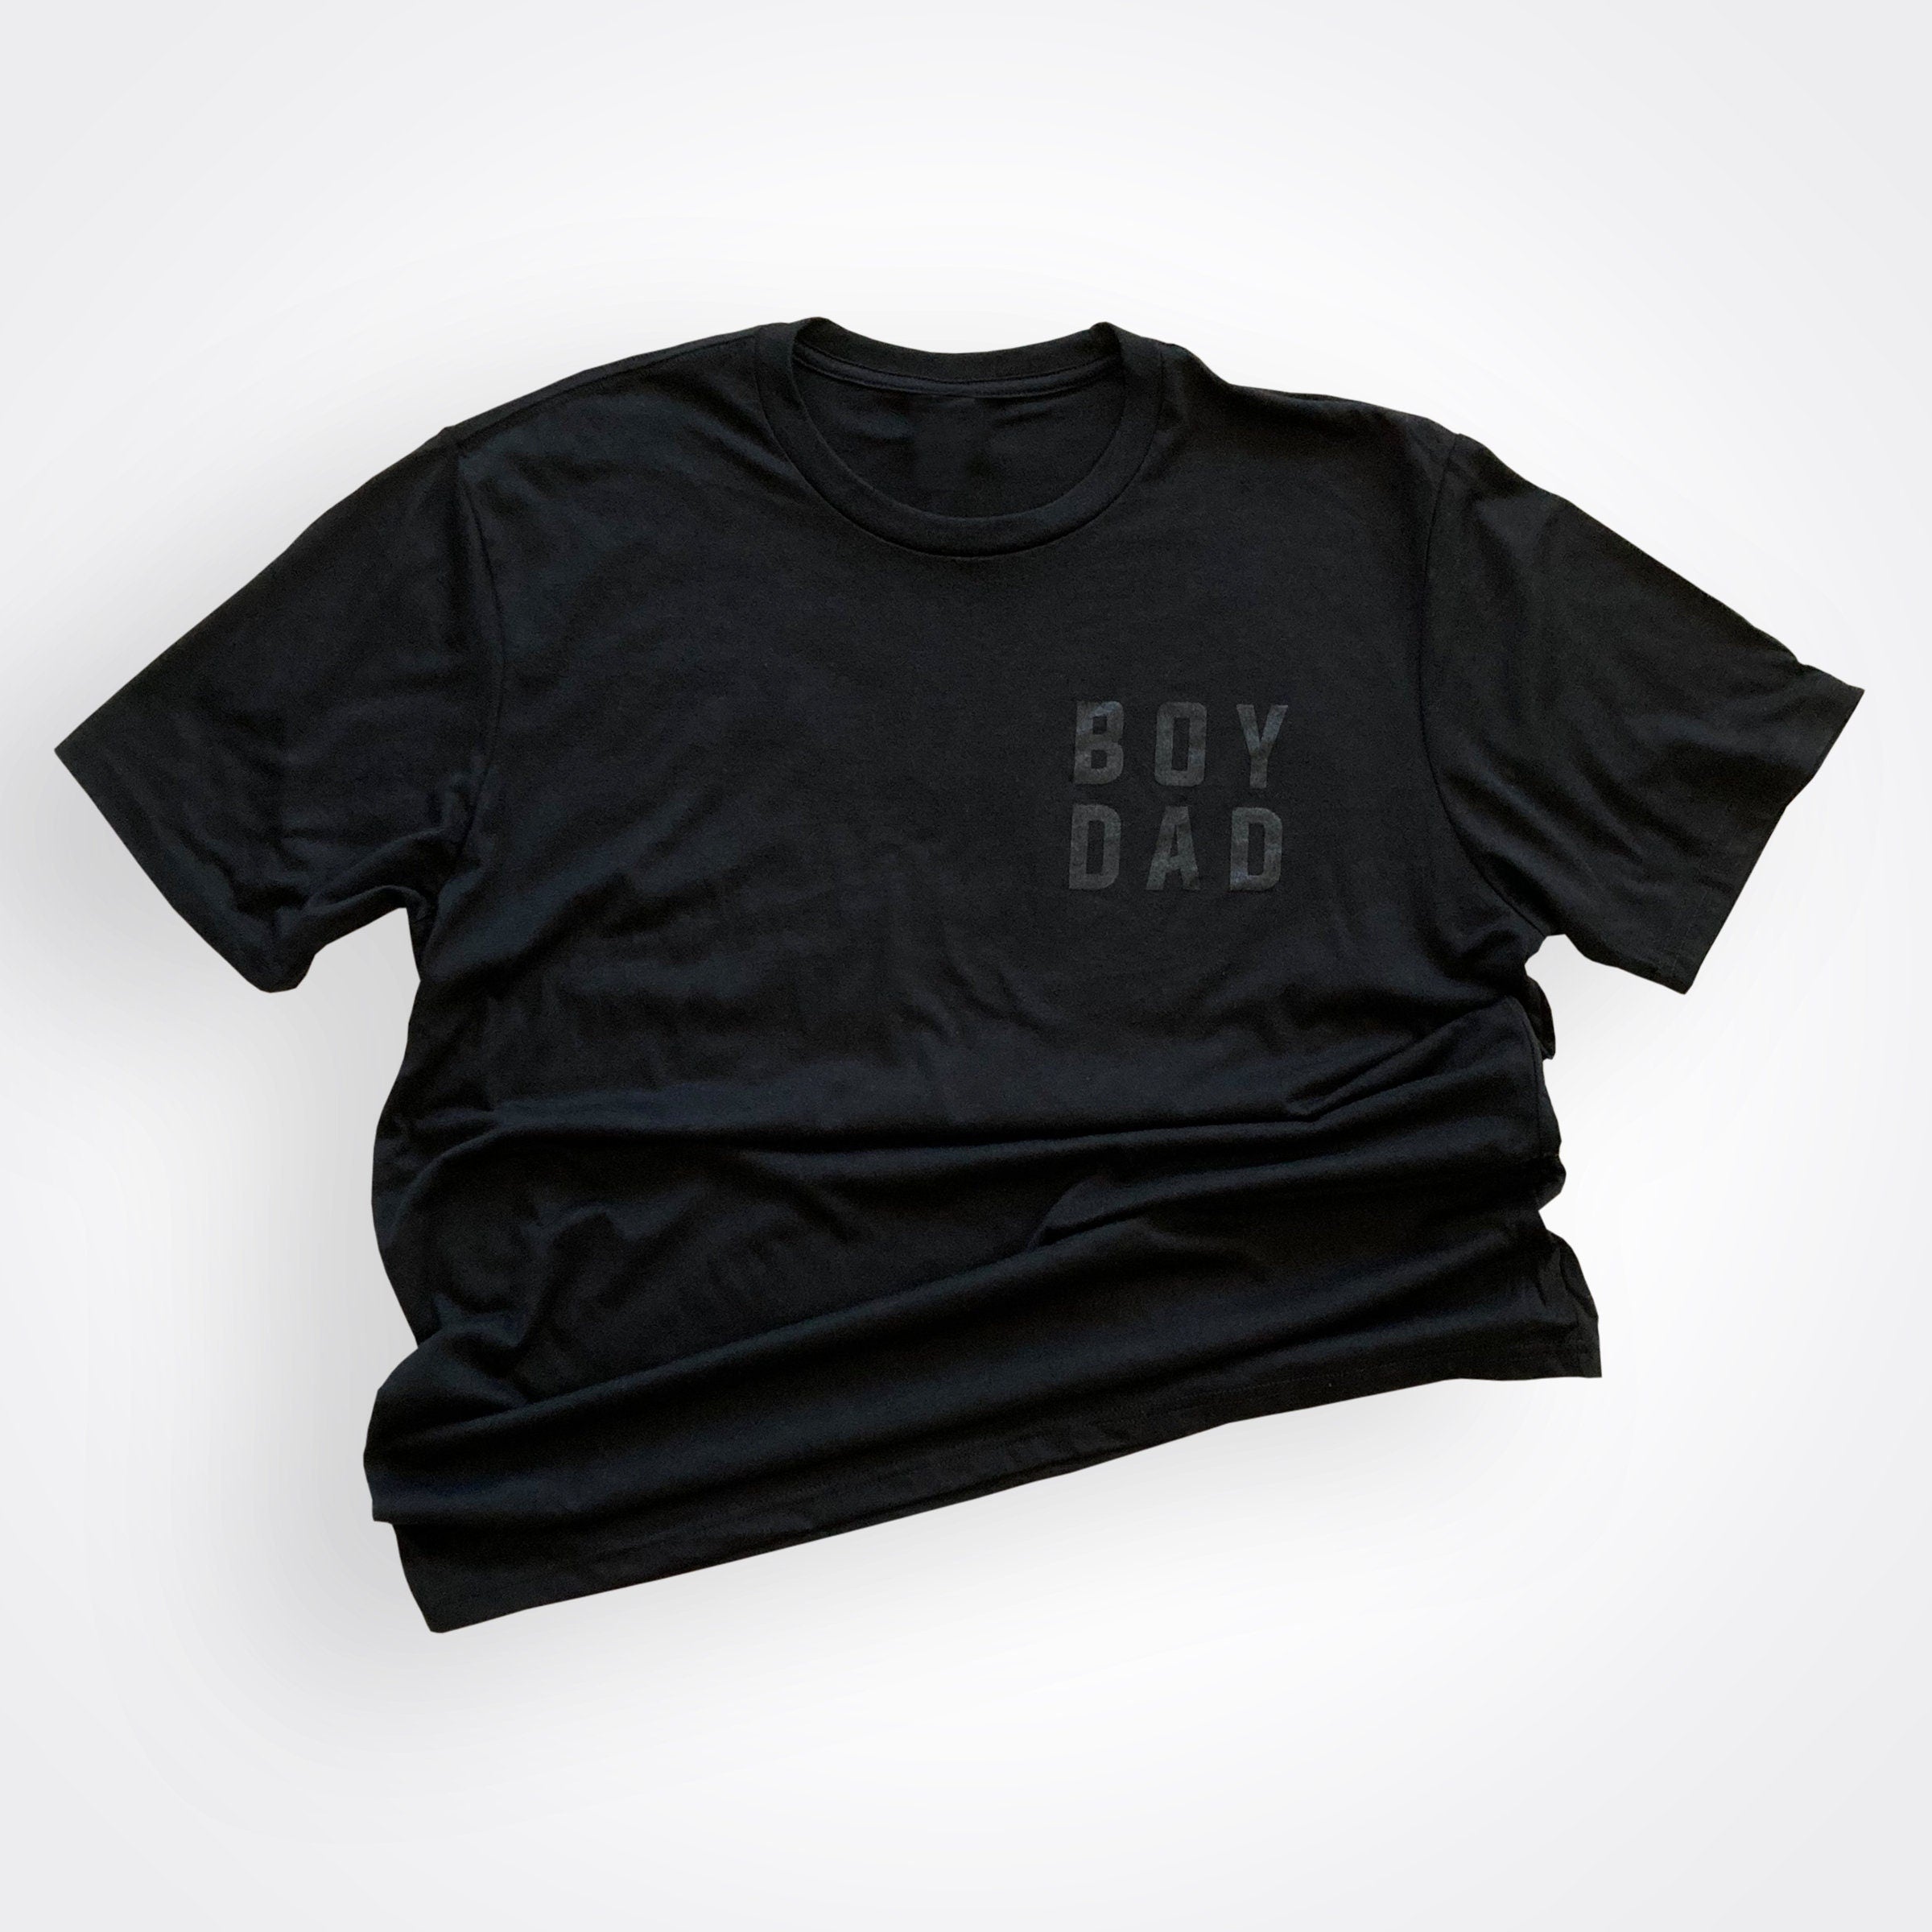 Boydad® Black on Black Left Chest Shirt